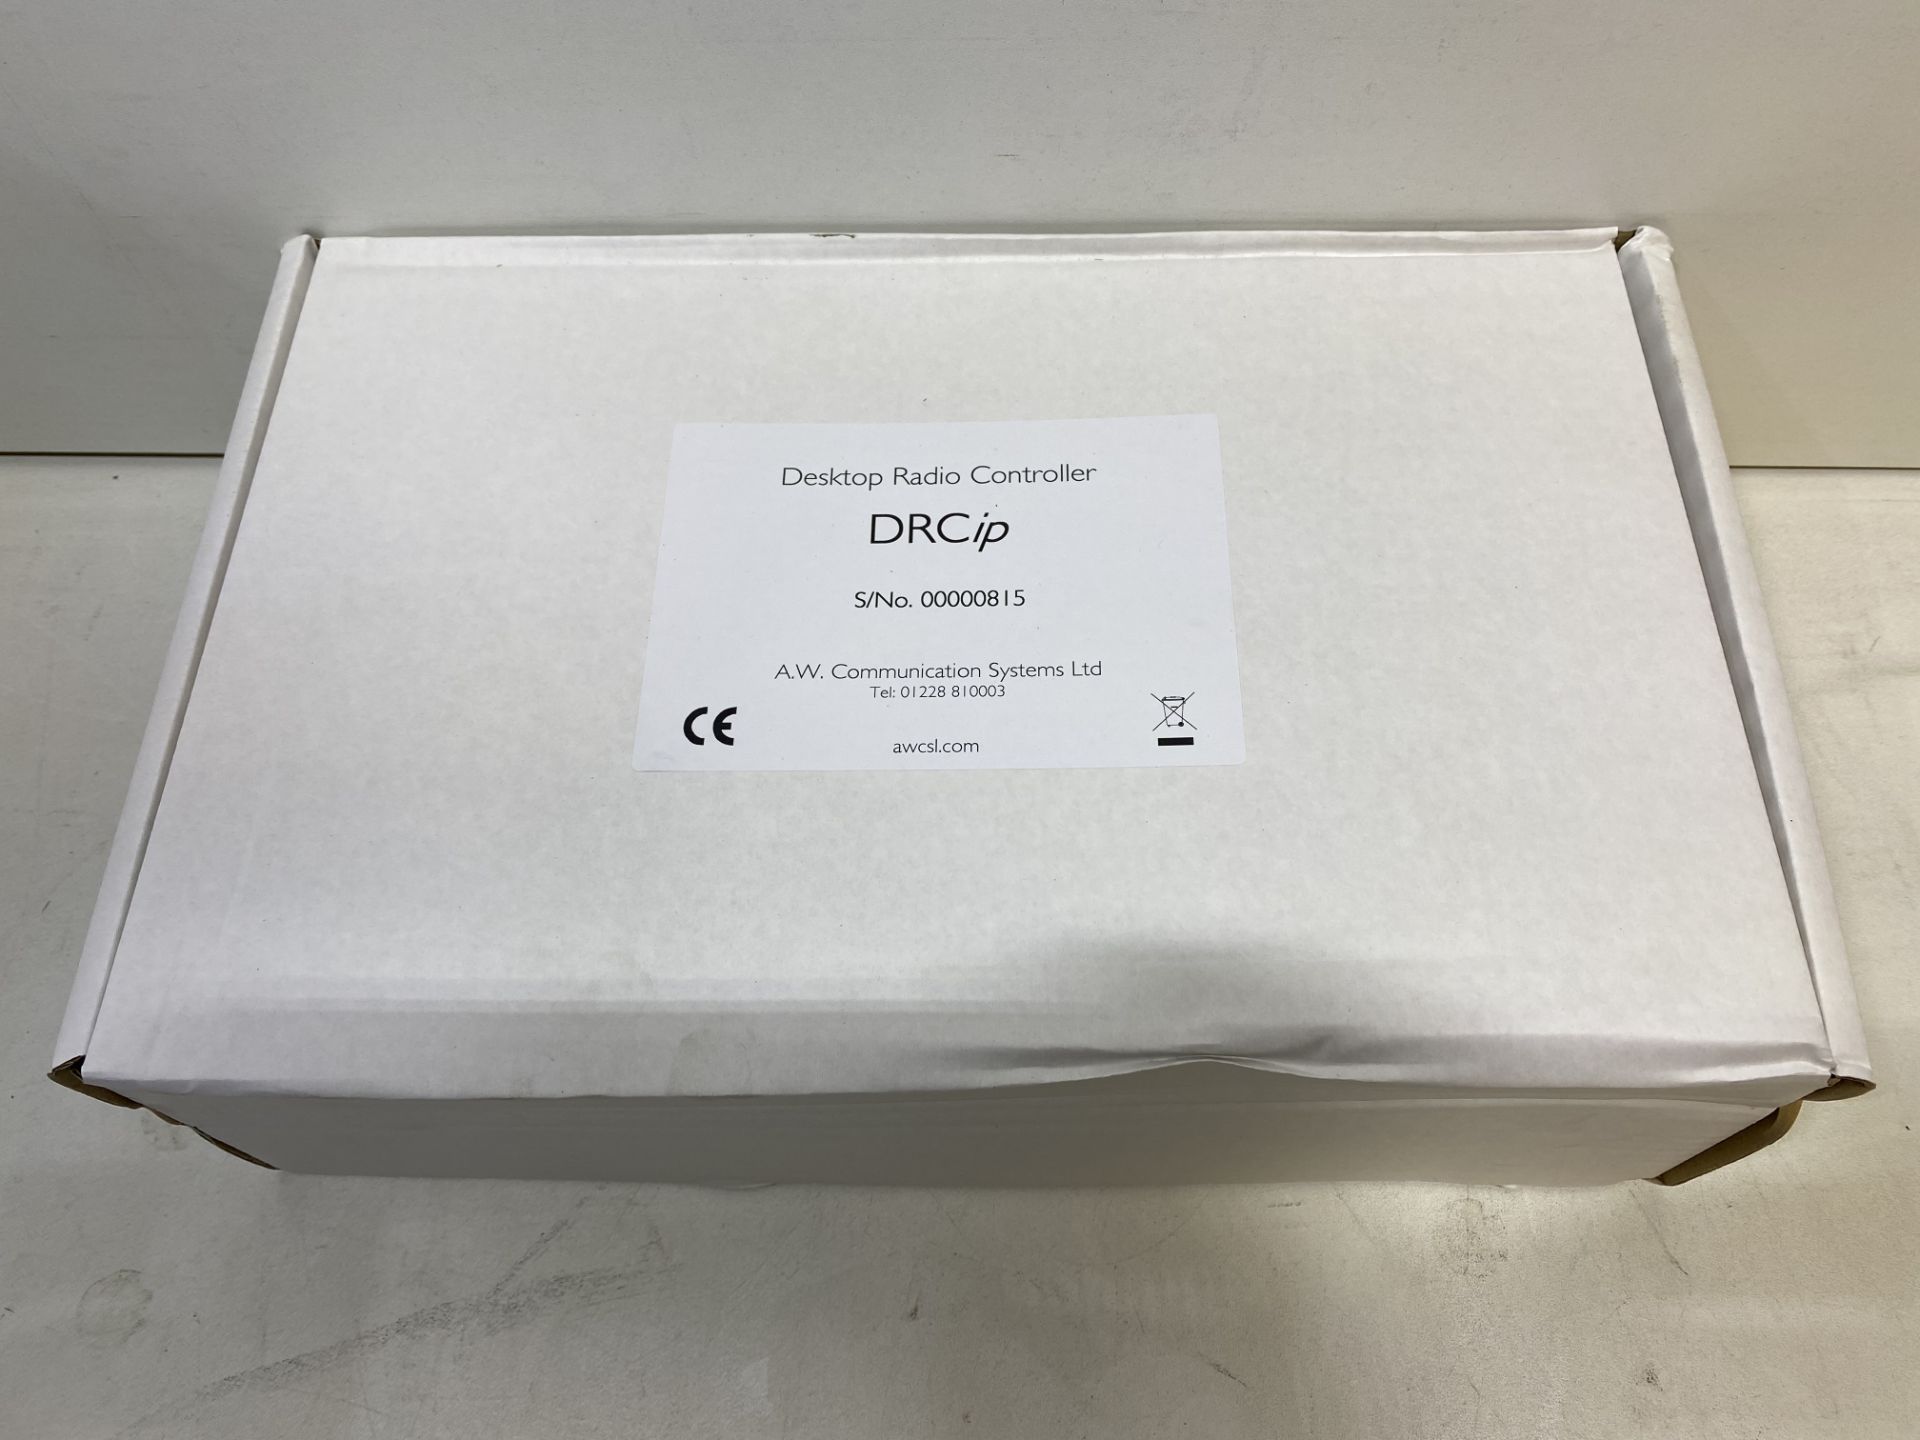 5 x DRCip Desktop Radio Controllers - Image 2 of 4